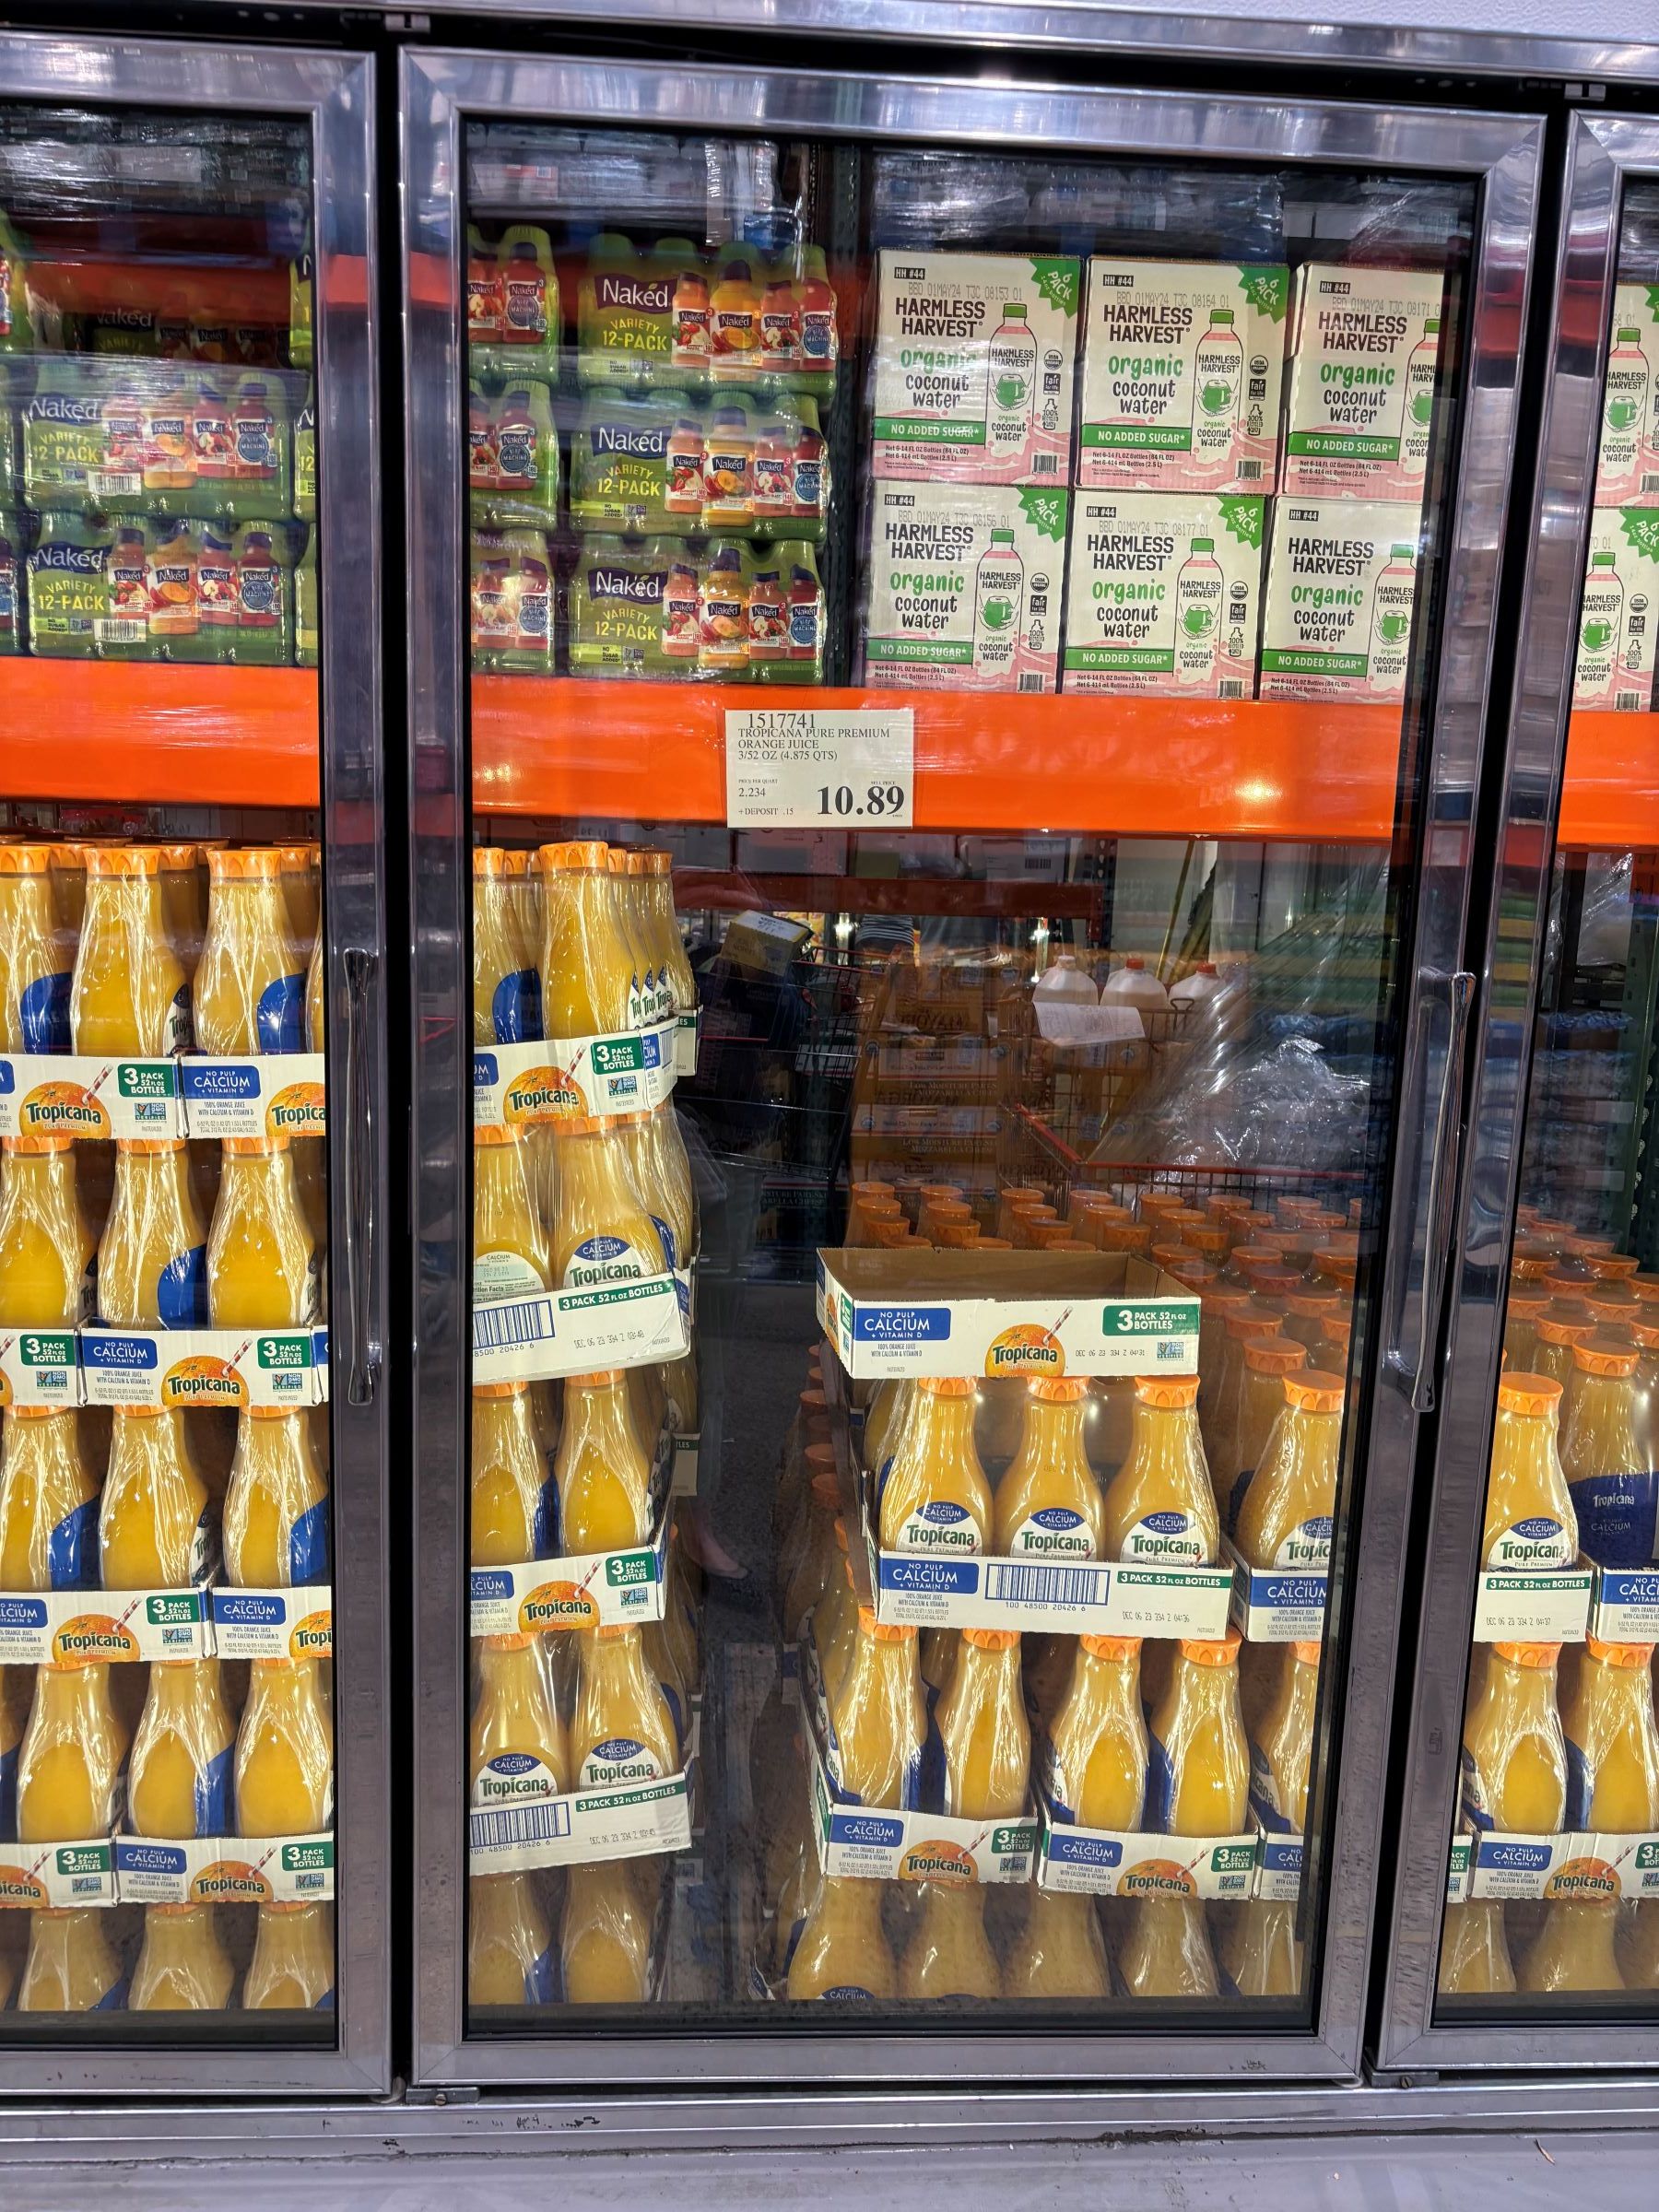 Shrinkflation Strikes Costco? The New Price and Size of Orange Juice!